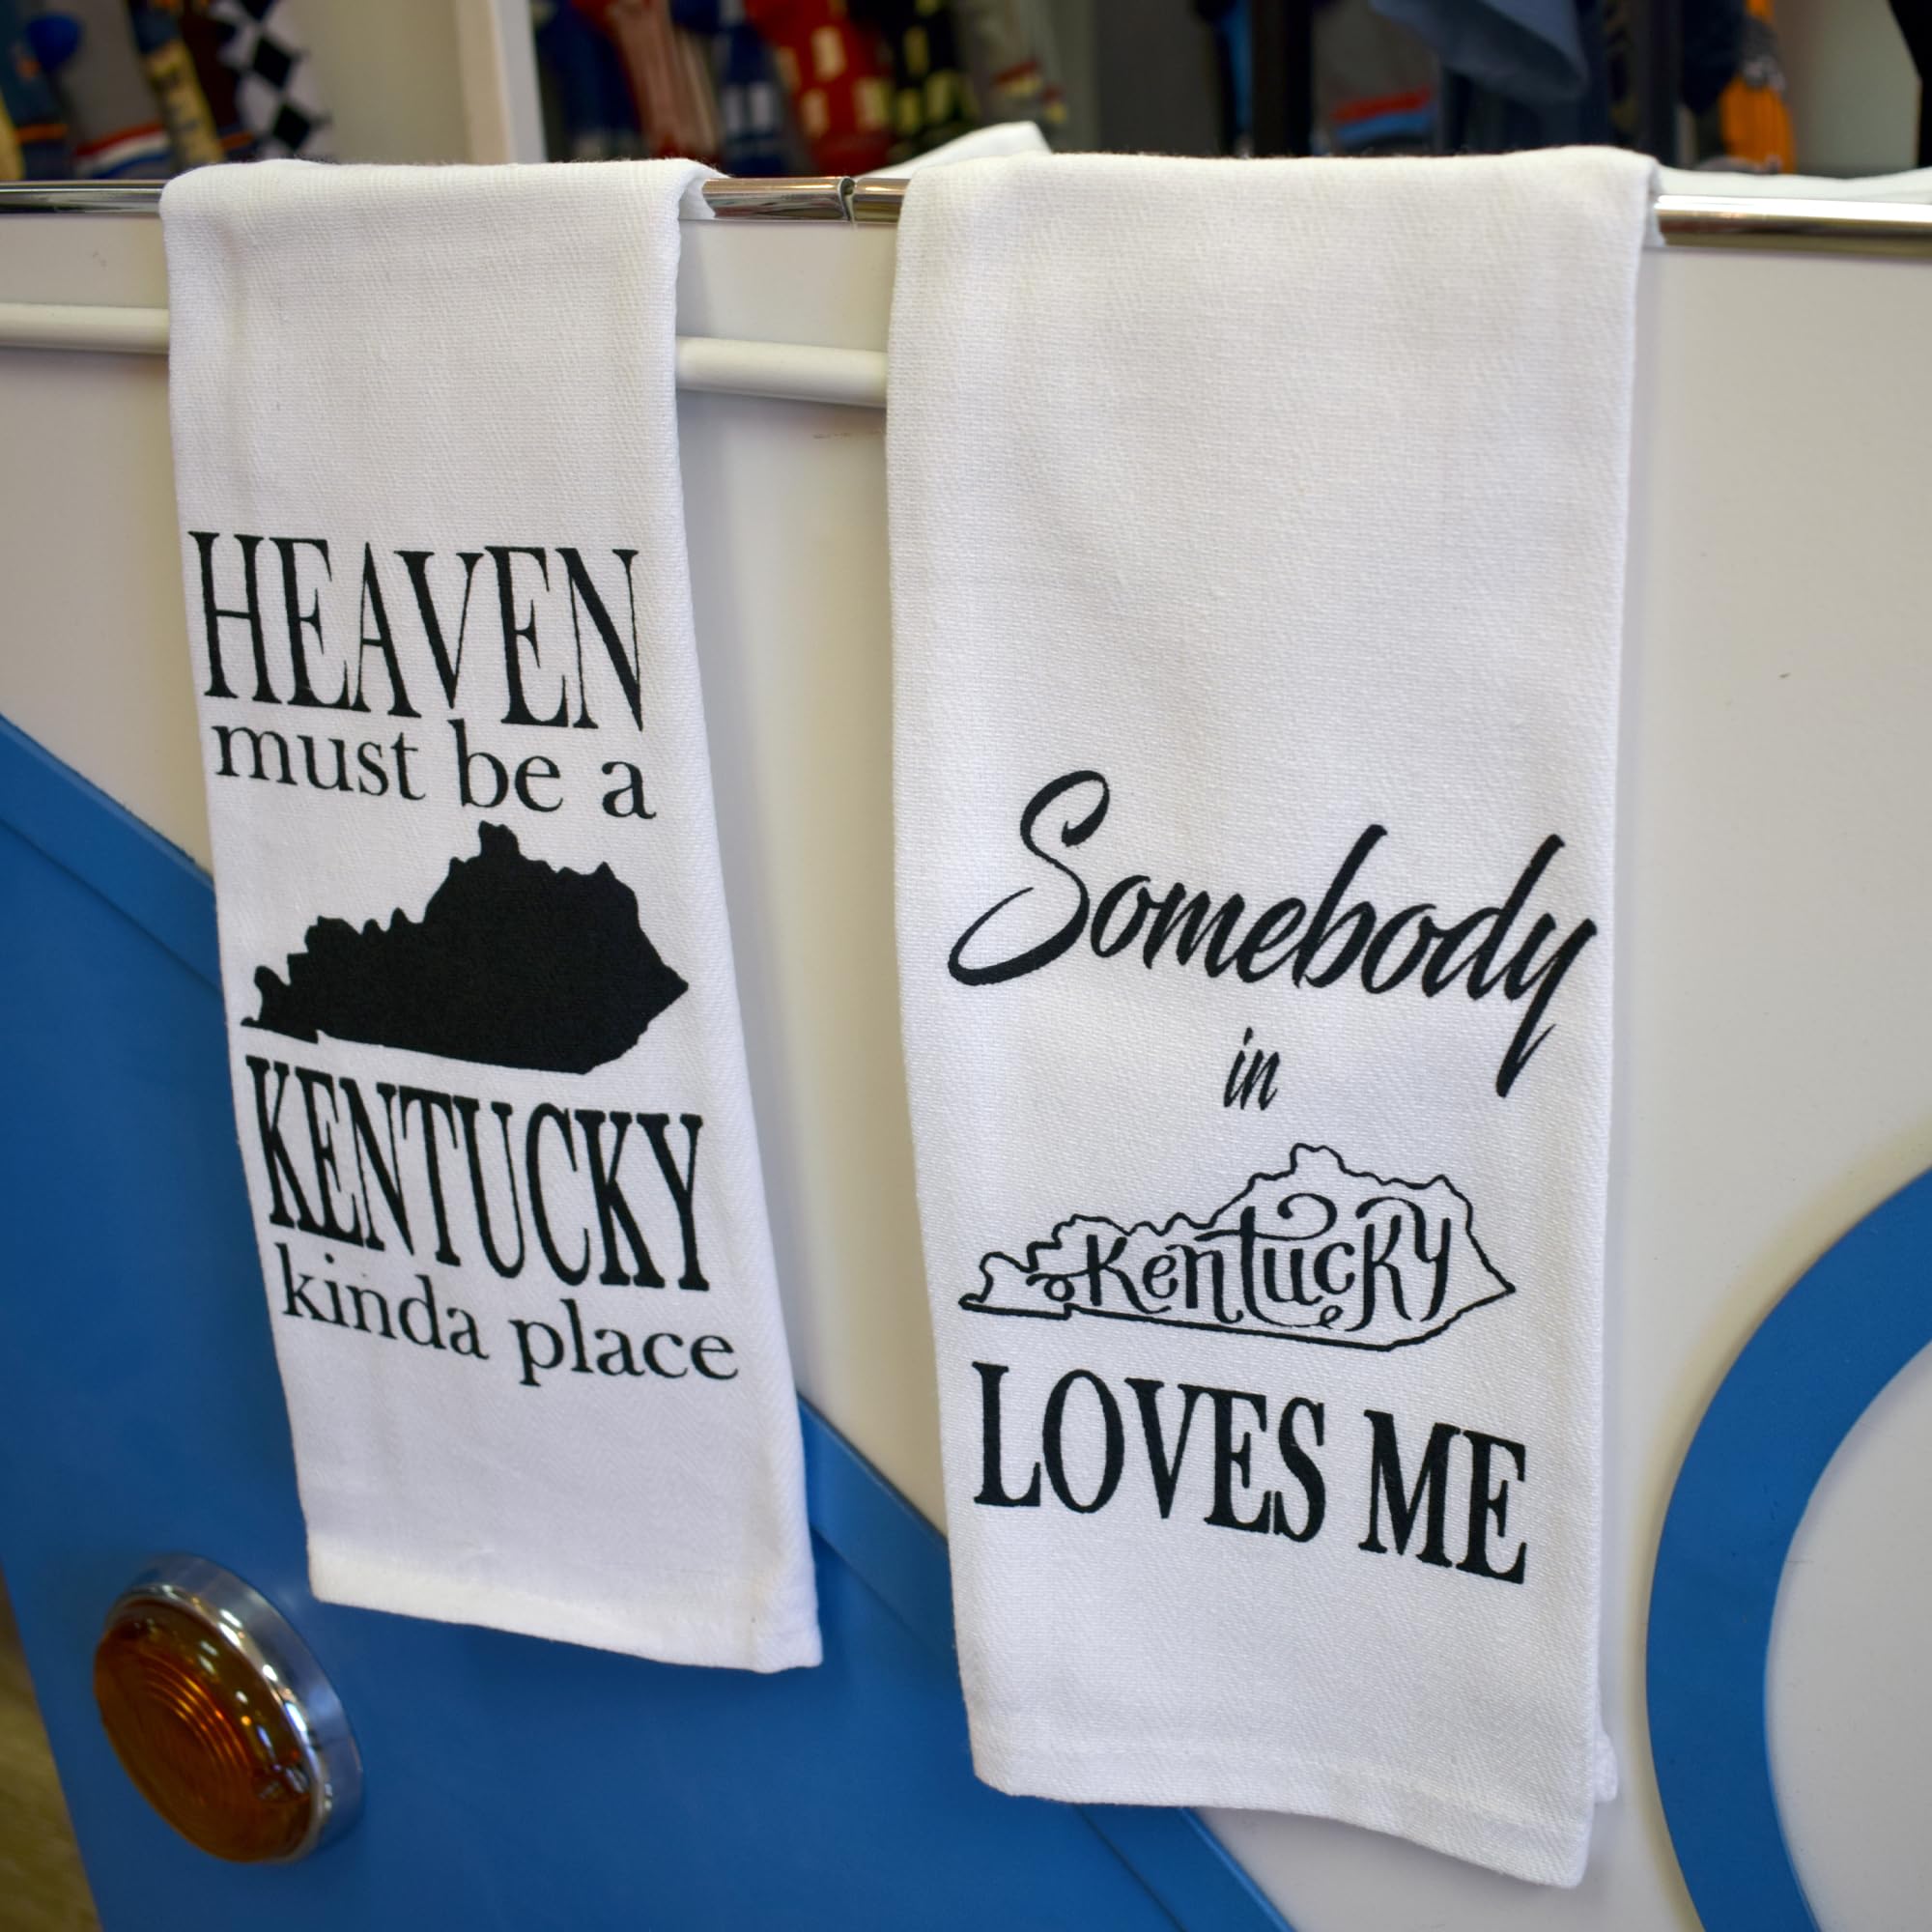 Somebody in Kentucky Loves Me Tea Towel